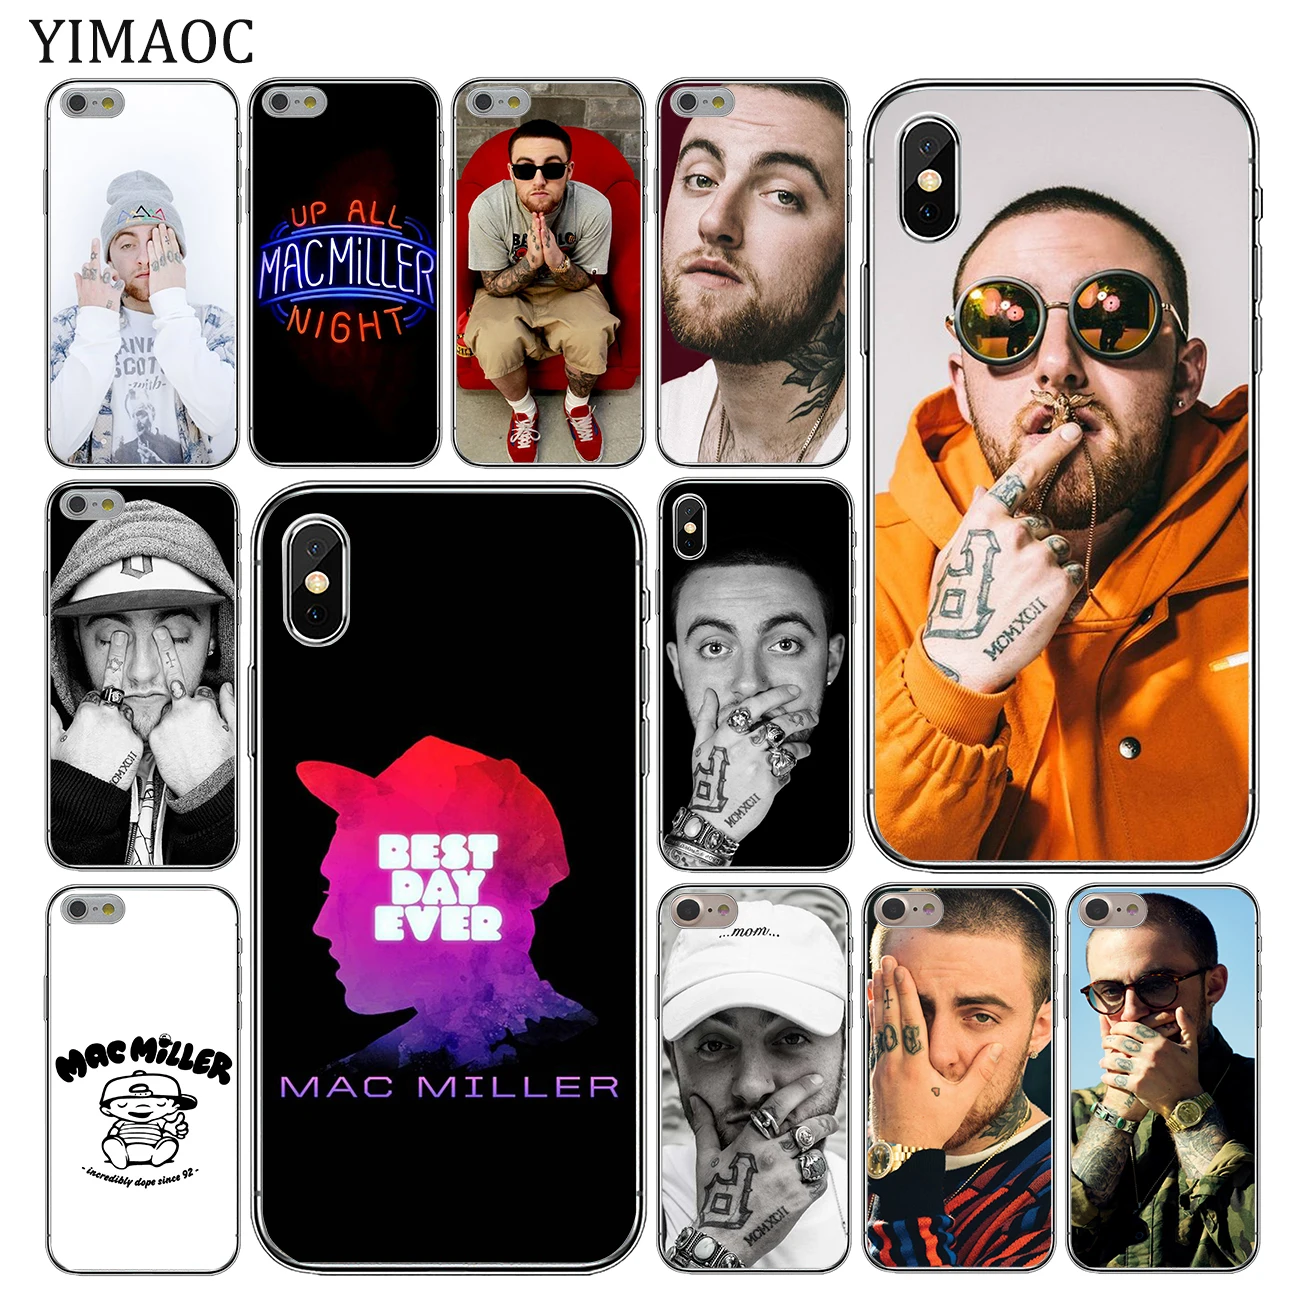 YIMAOC Macs Miller Мягкий силиконовый чехол для Apple iPhone 11 Pro X XR XS Max 6 6S 7 8 Plus 5 5S SE 10 TPU чехлы